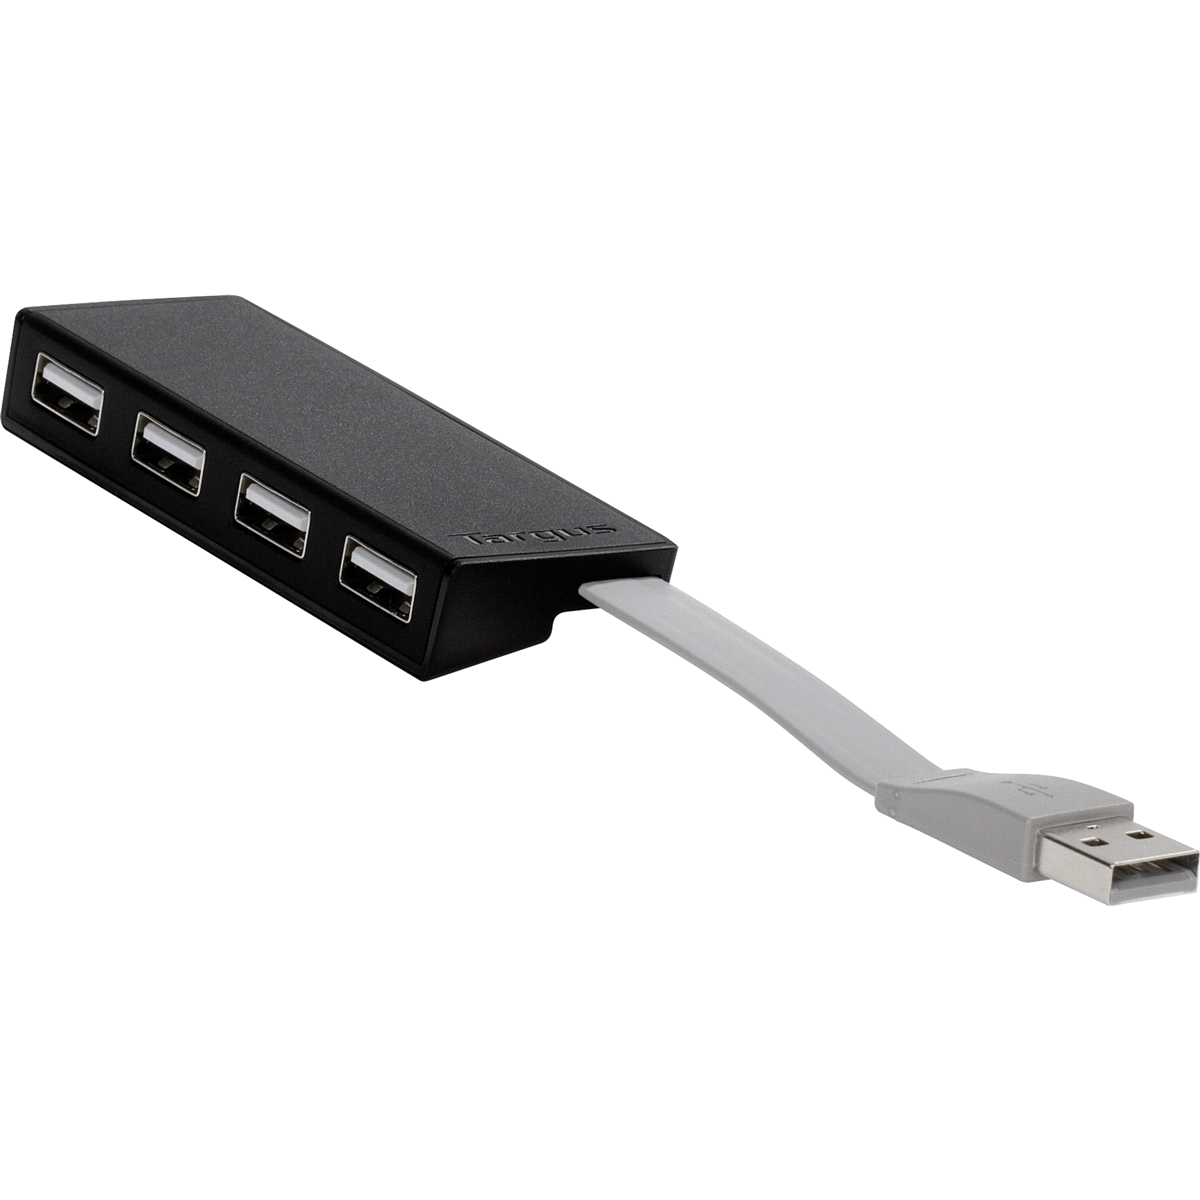 slide 4 of 4, Targus Mini USB 2.0 4-Port Hub, 1 ct